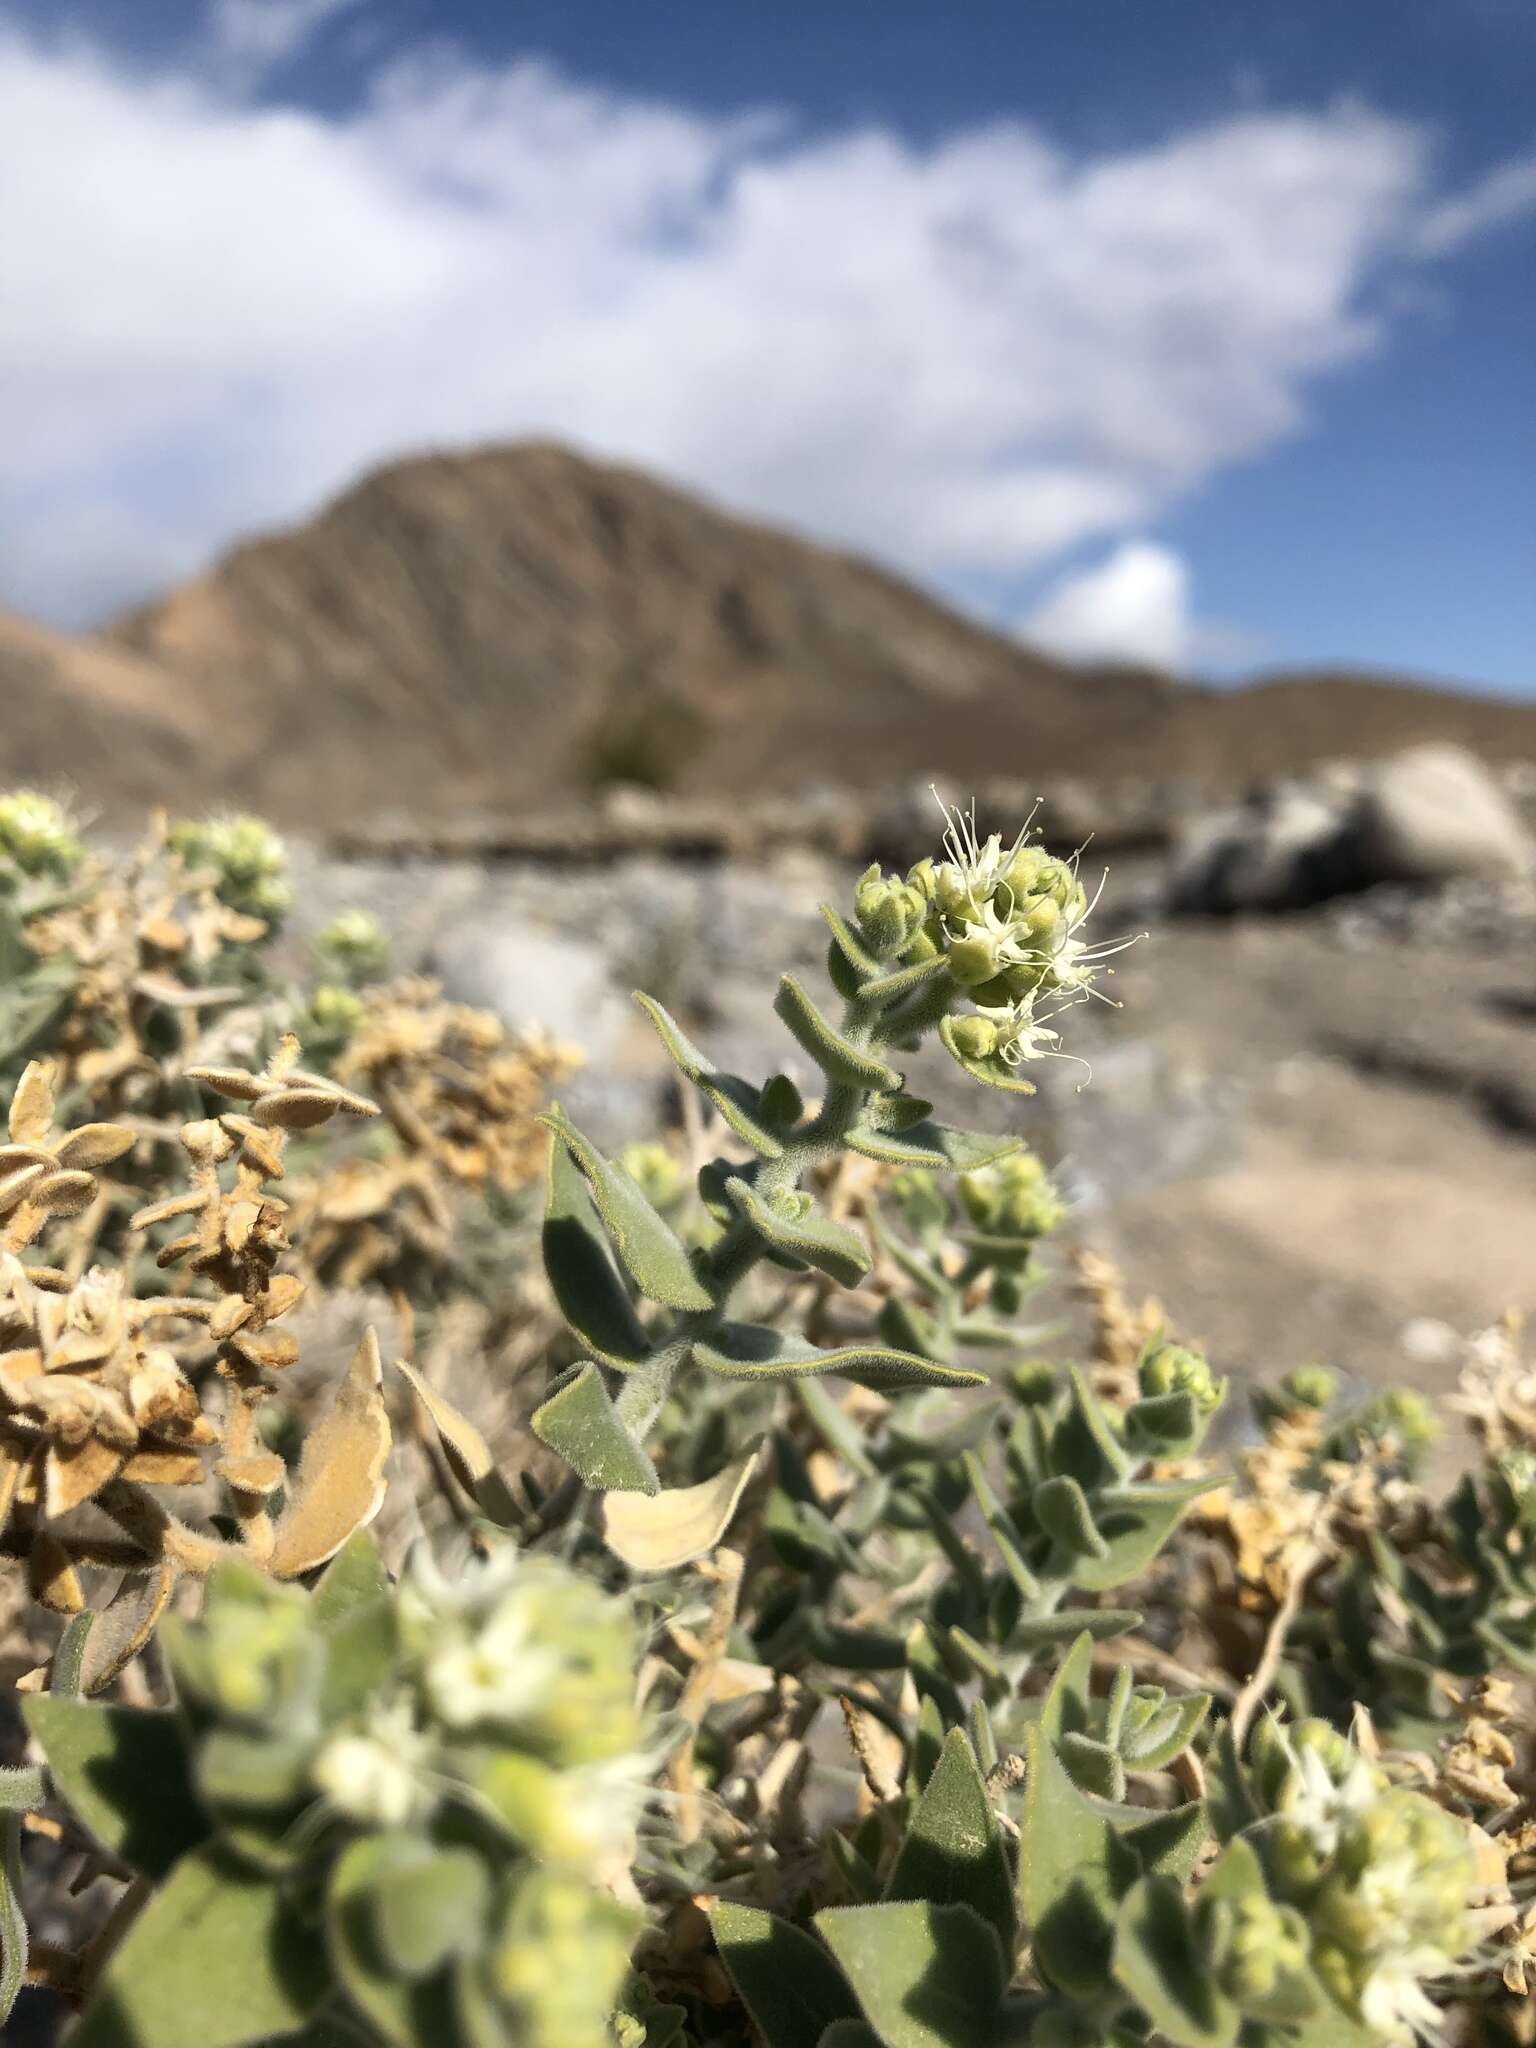 Image of Death Valley sandpaper plant